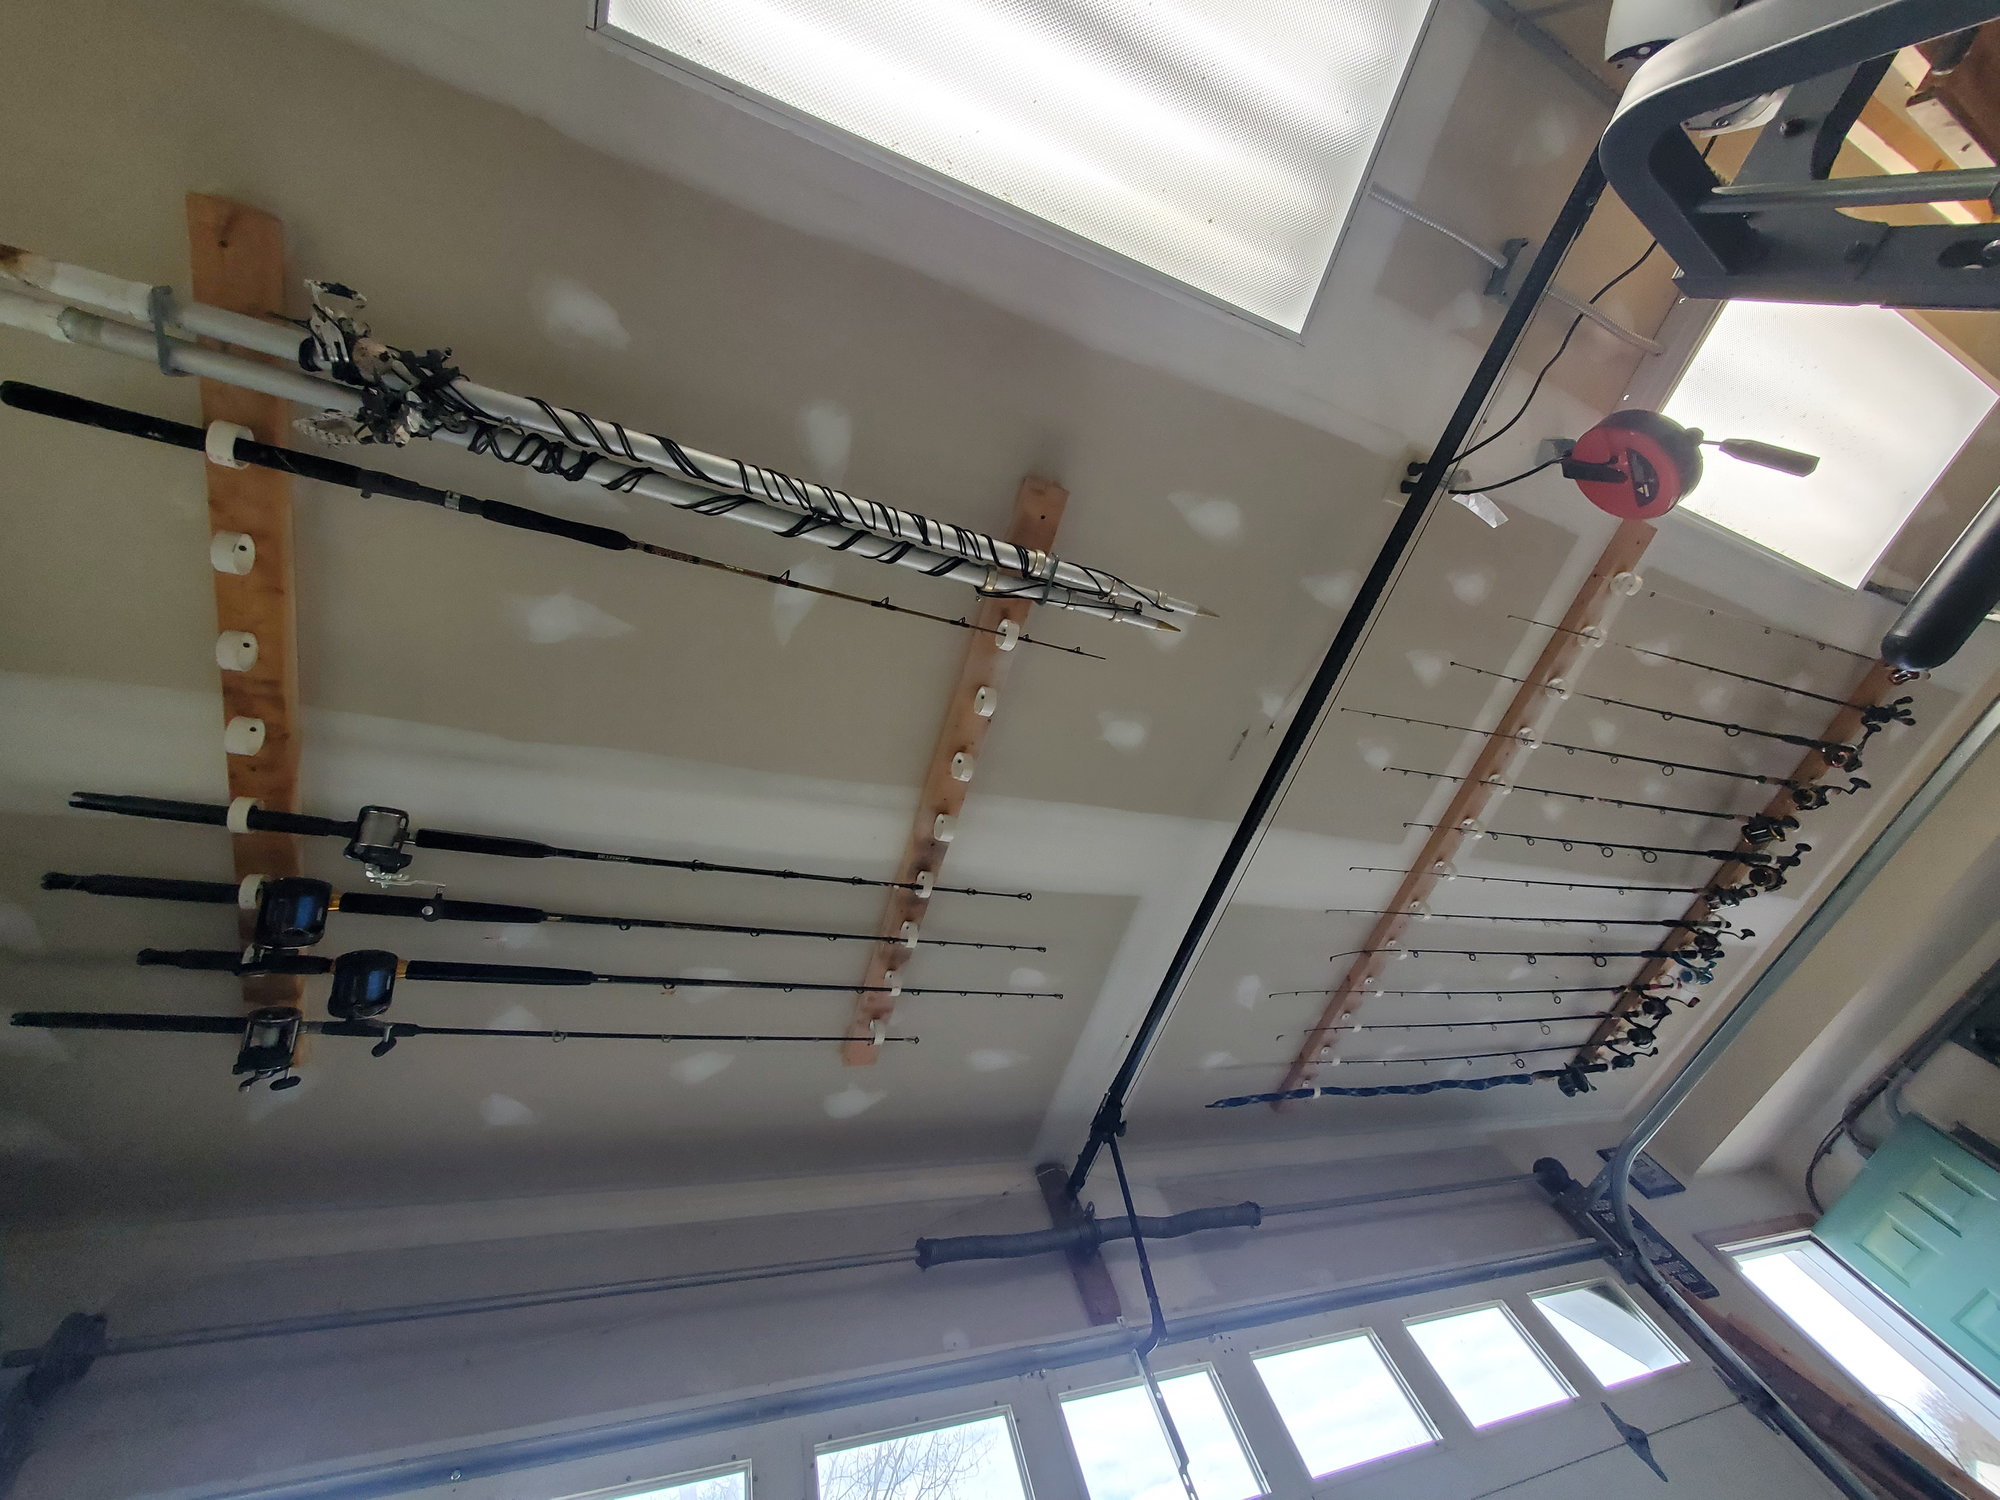 Ideas for a garage ceiling rod rack? - Main Forum - SurfTalk